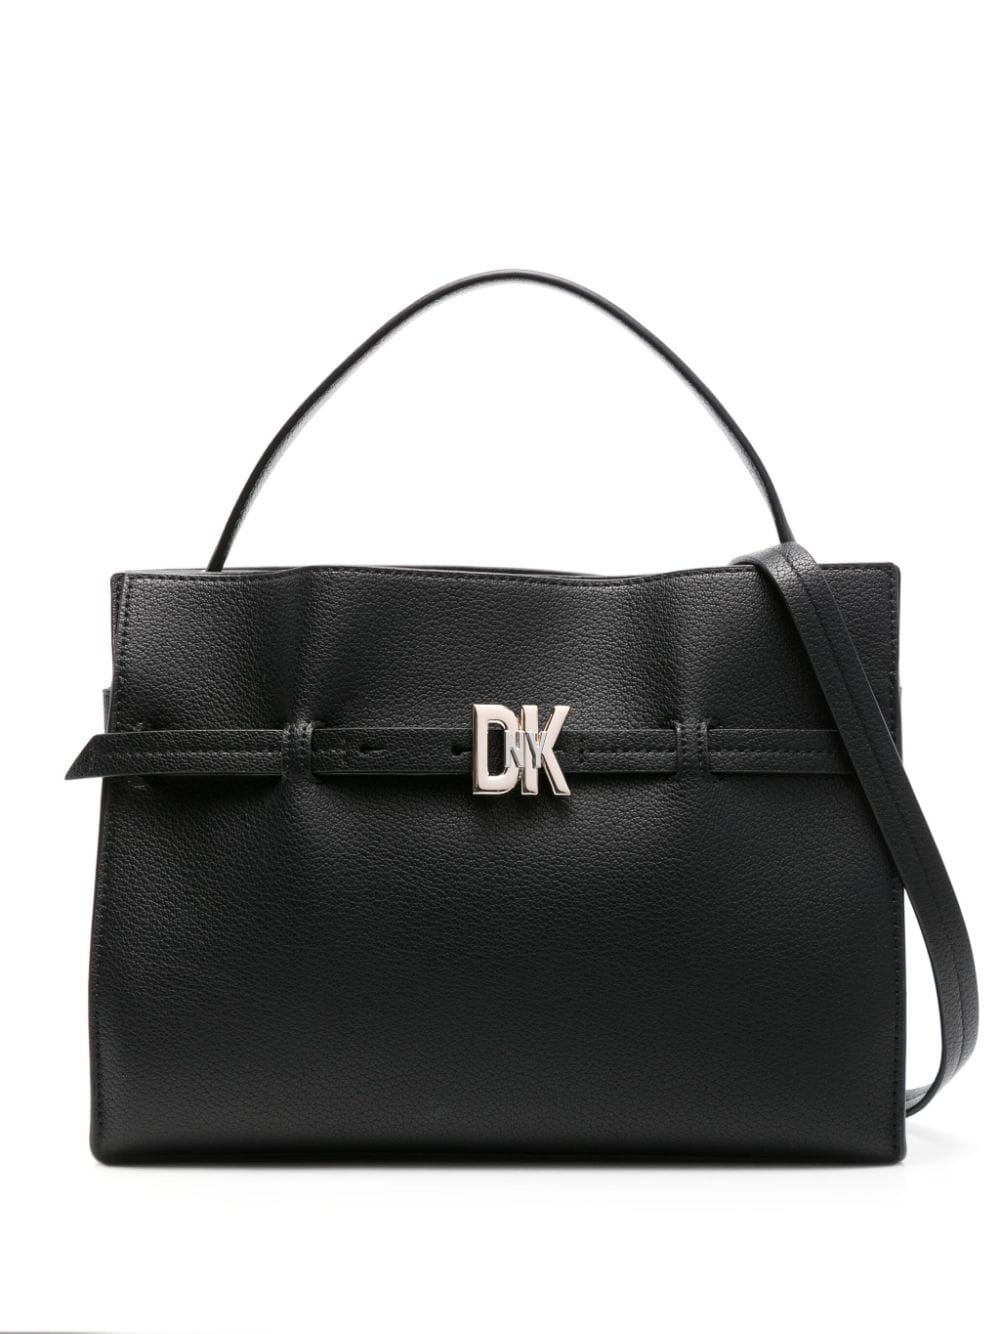 DKNY Brunswick bag black